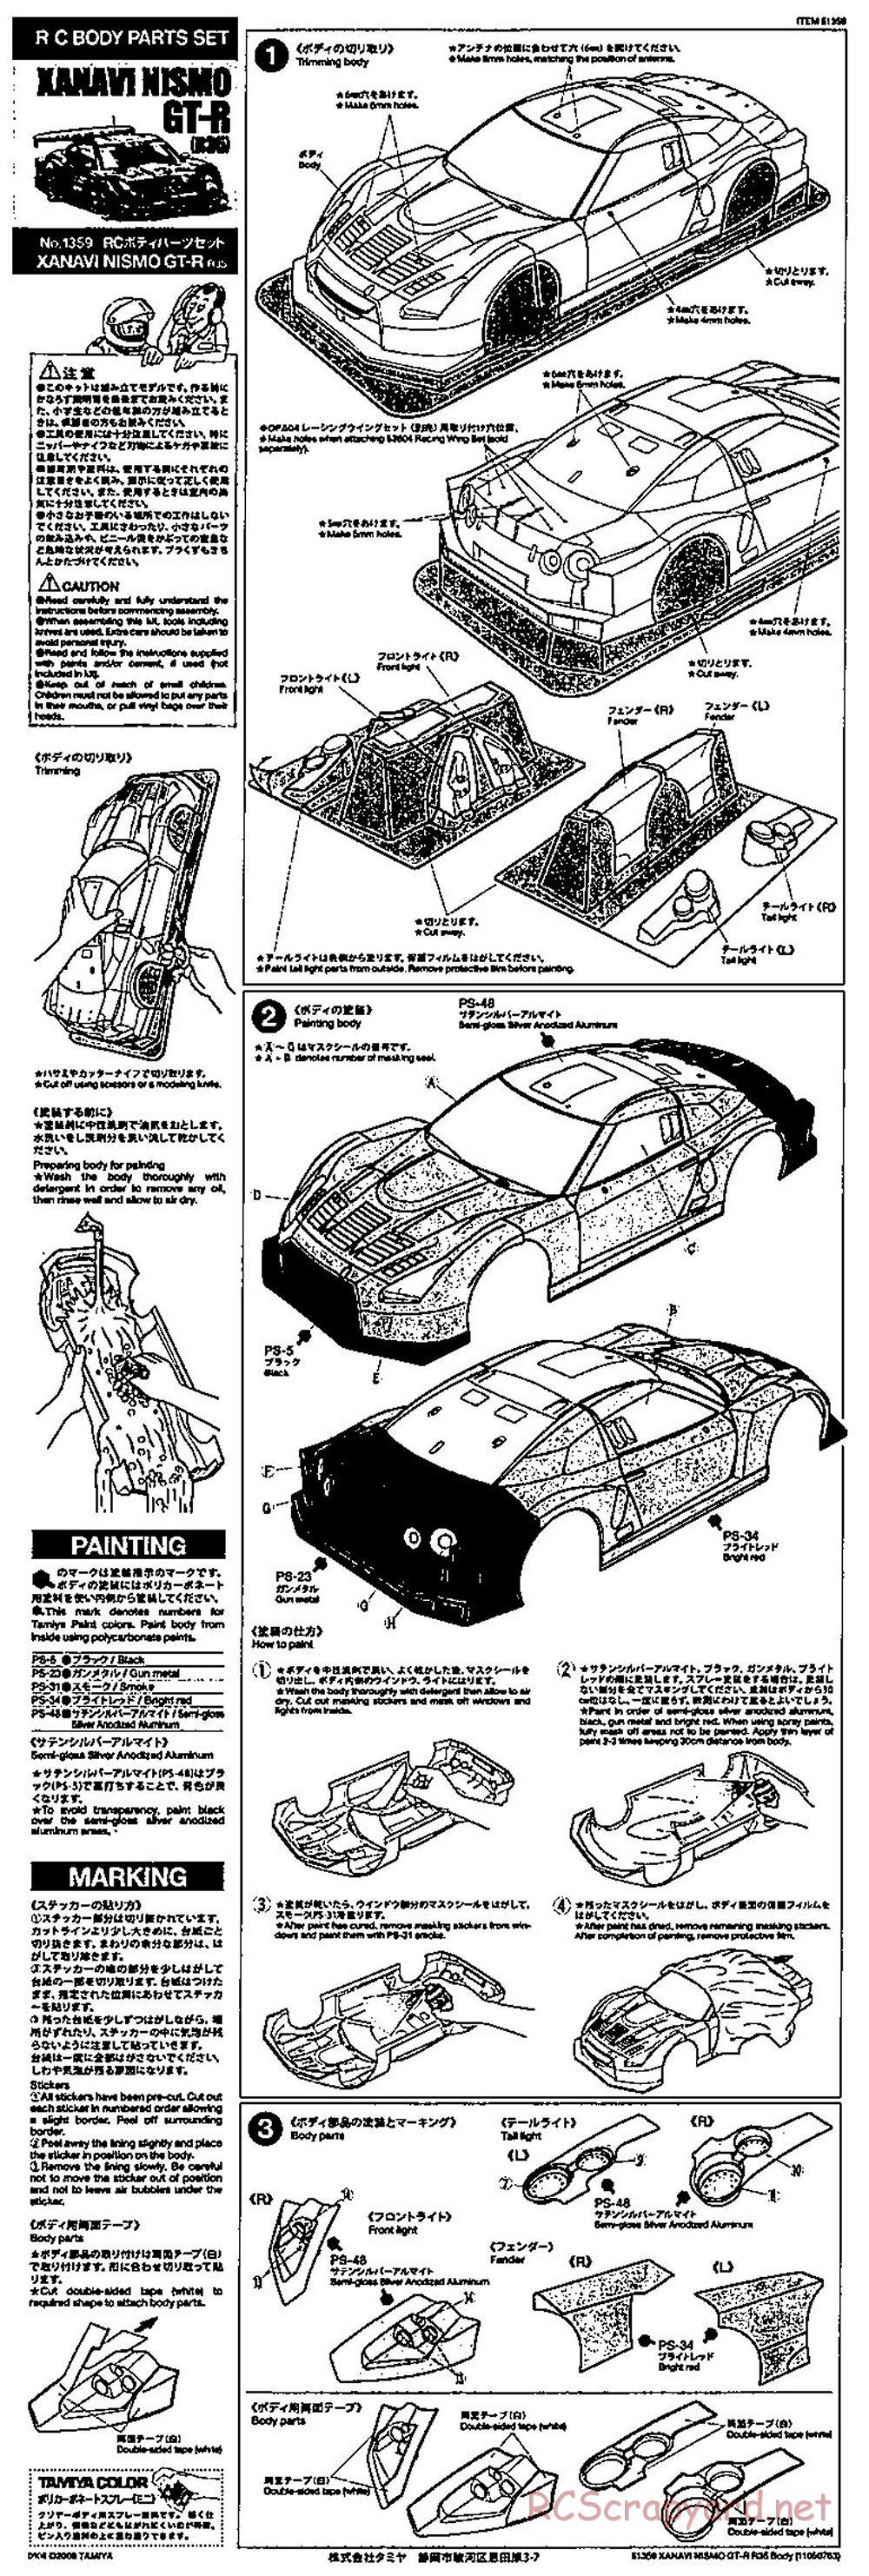 Tamiya - Xanavi Nismo GT-R (R35) - TB-03 Chassis - Body Manual - Page 1